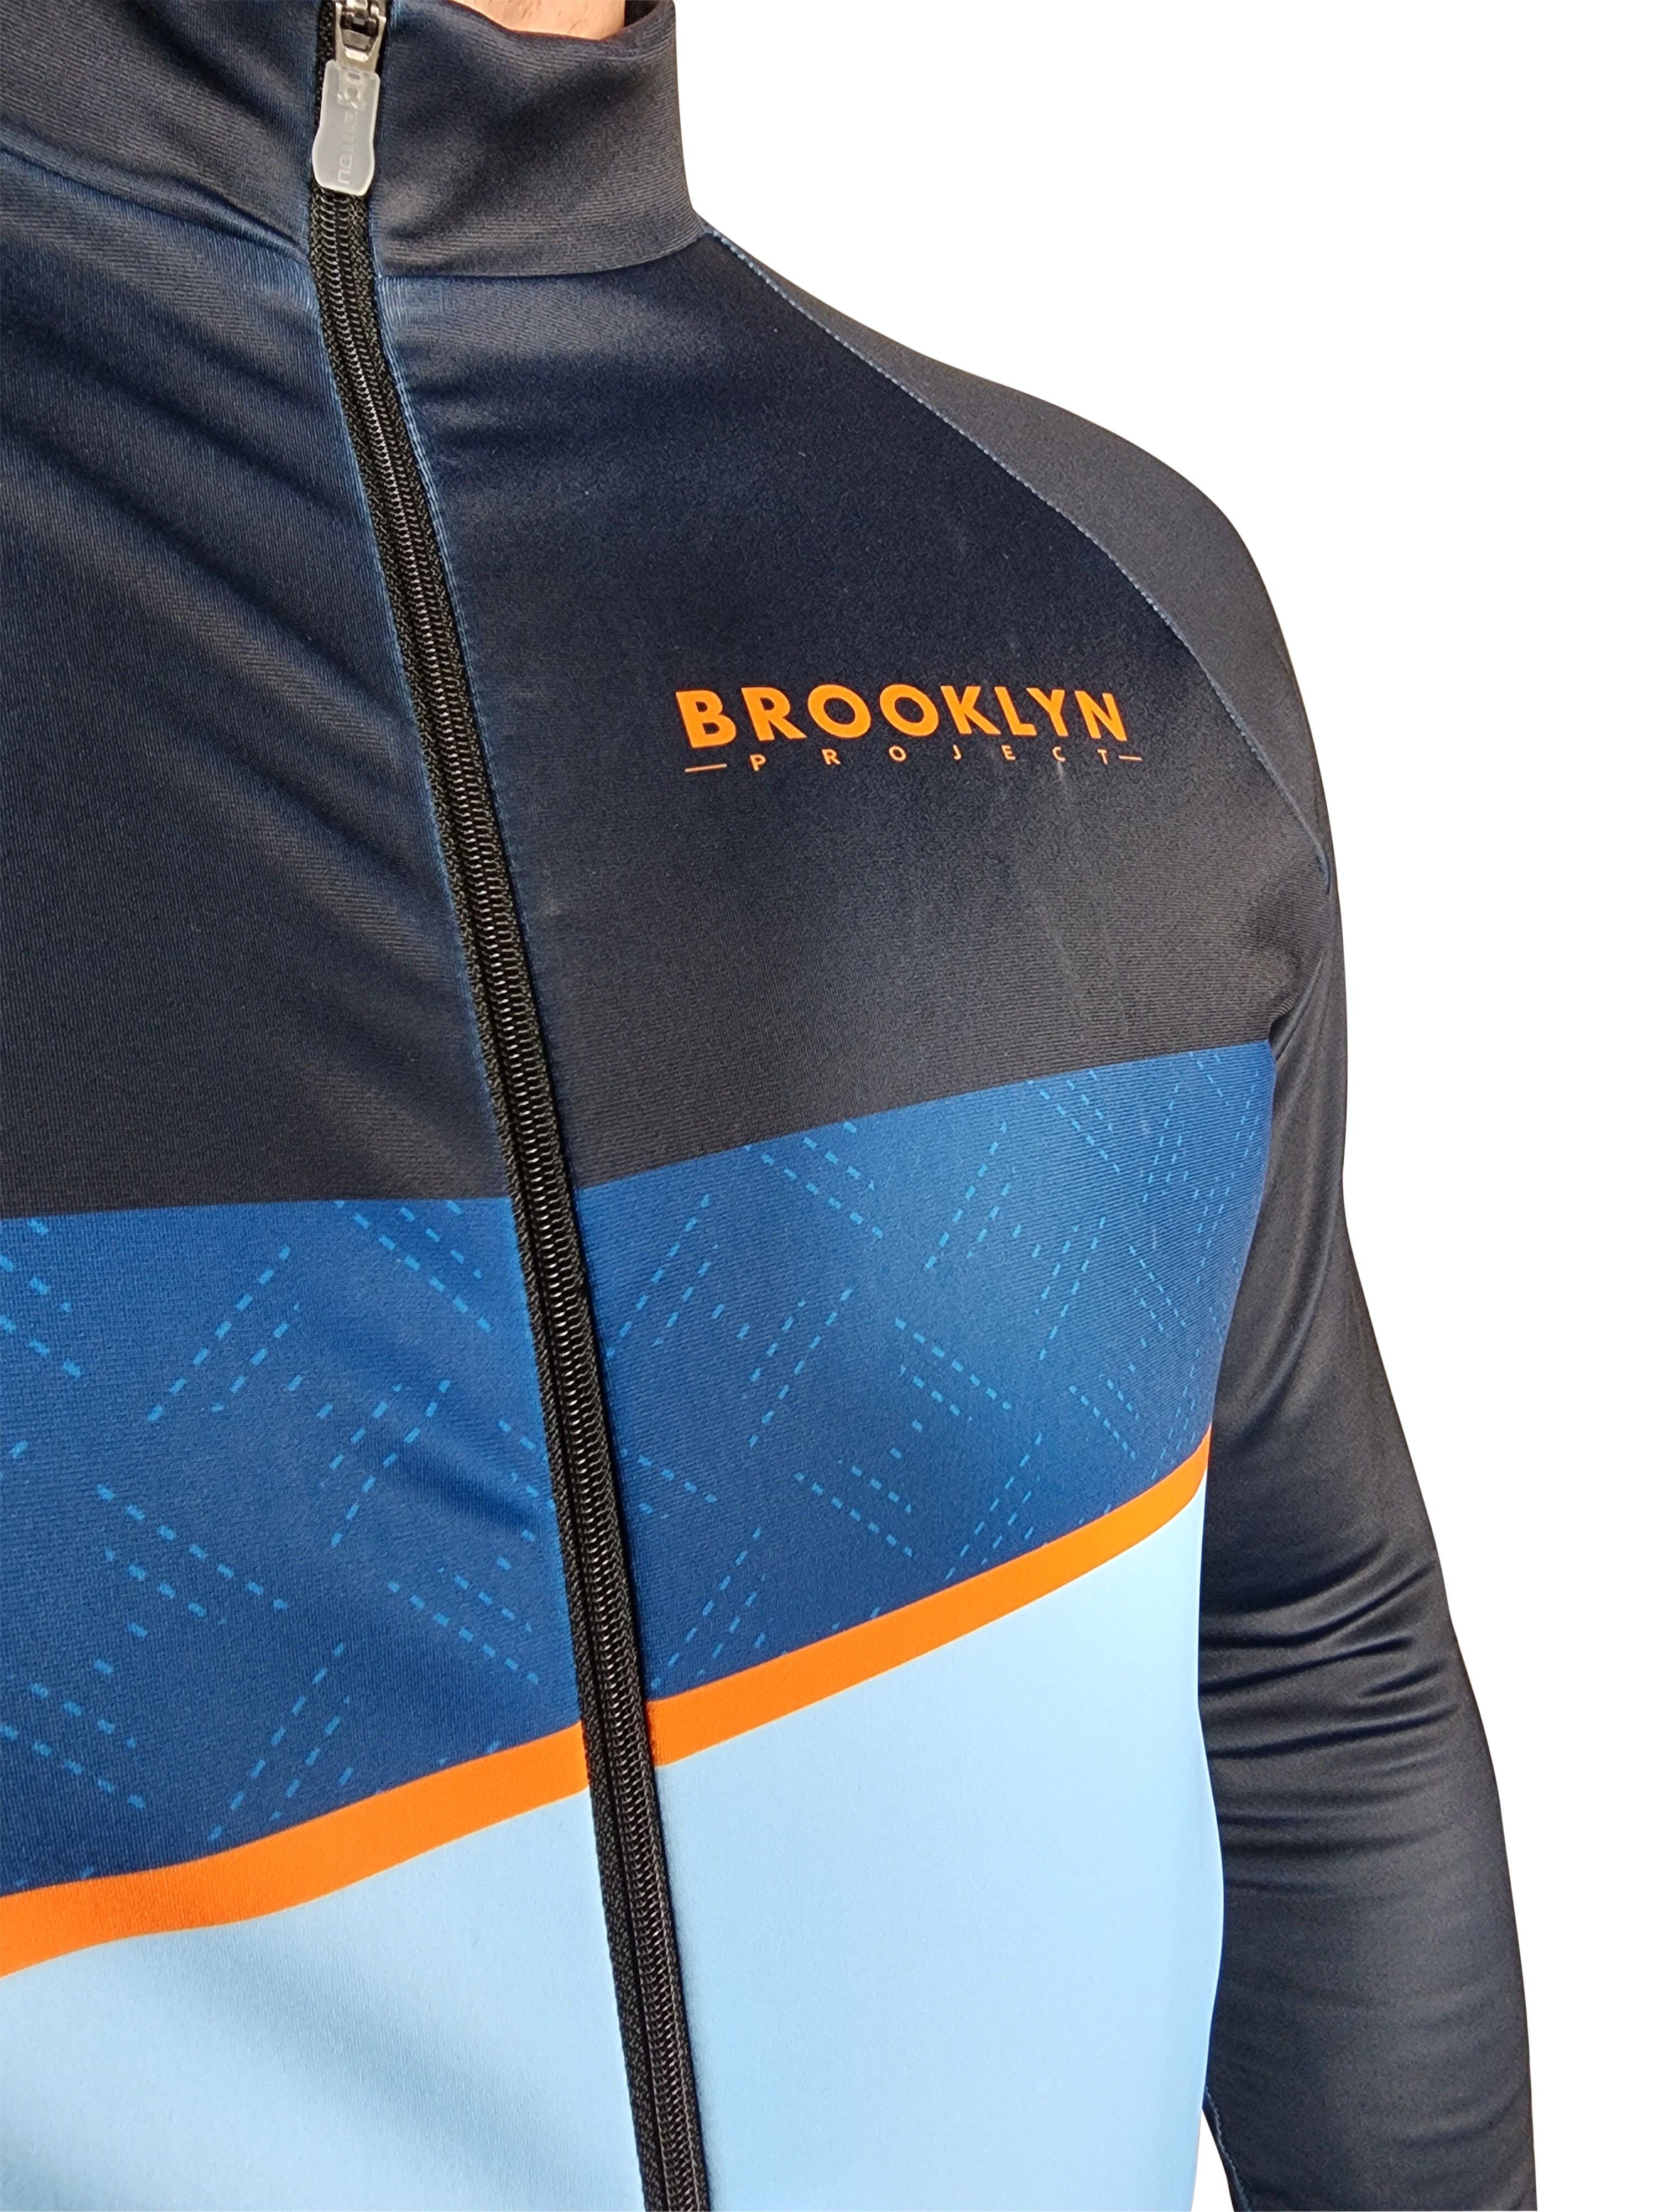 BKN Blue Thermal Jacket FRONT detail